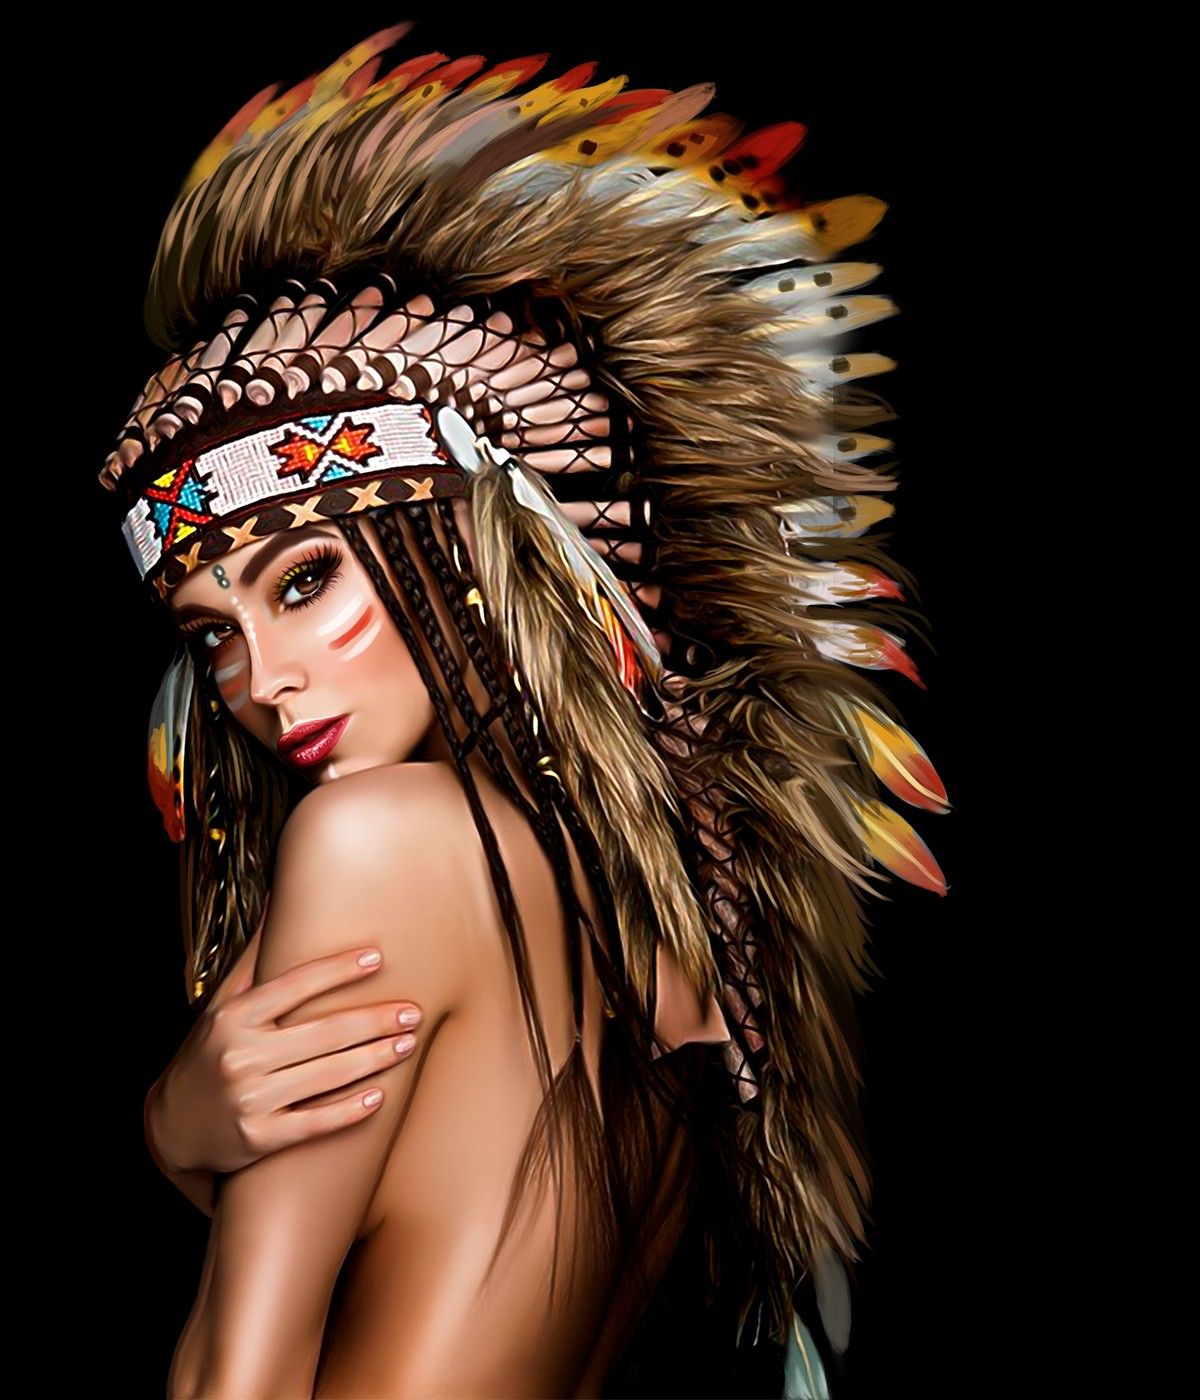 brian denolf recommends Native American Girl Xxx